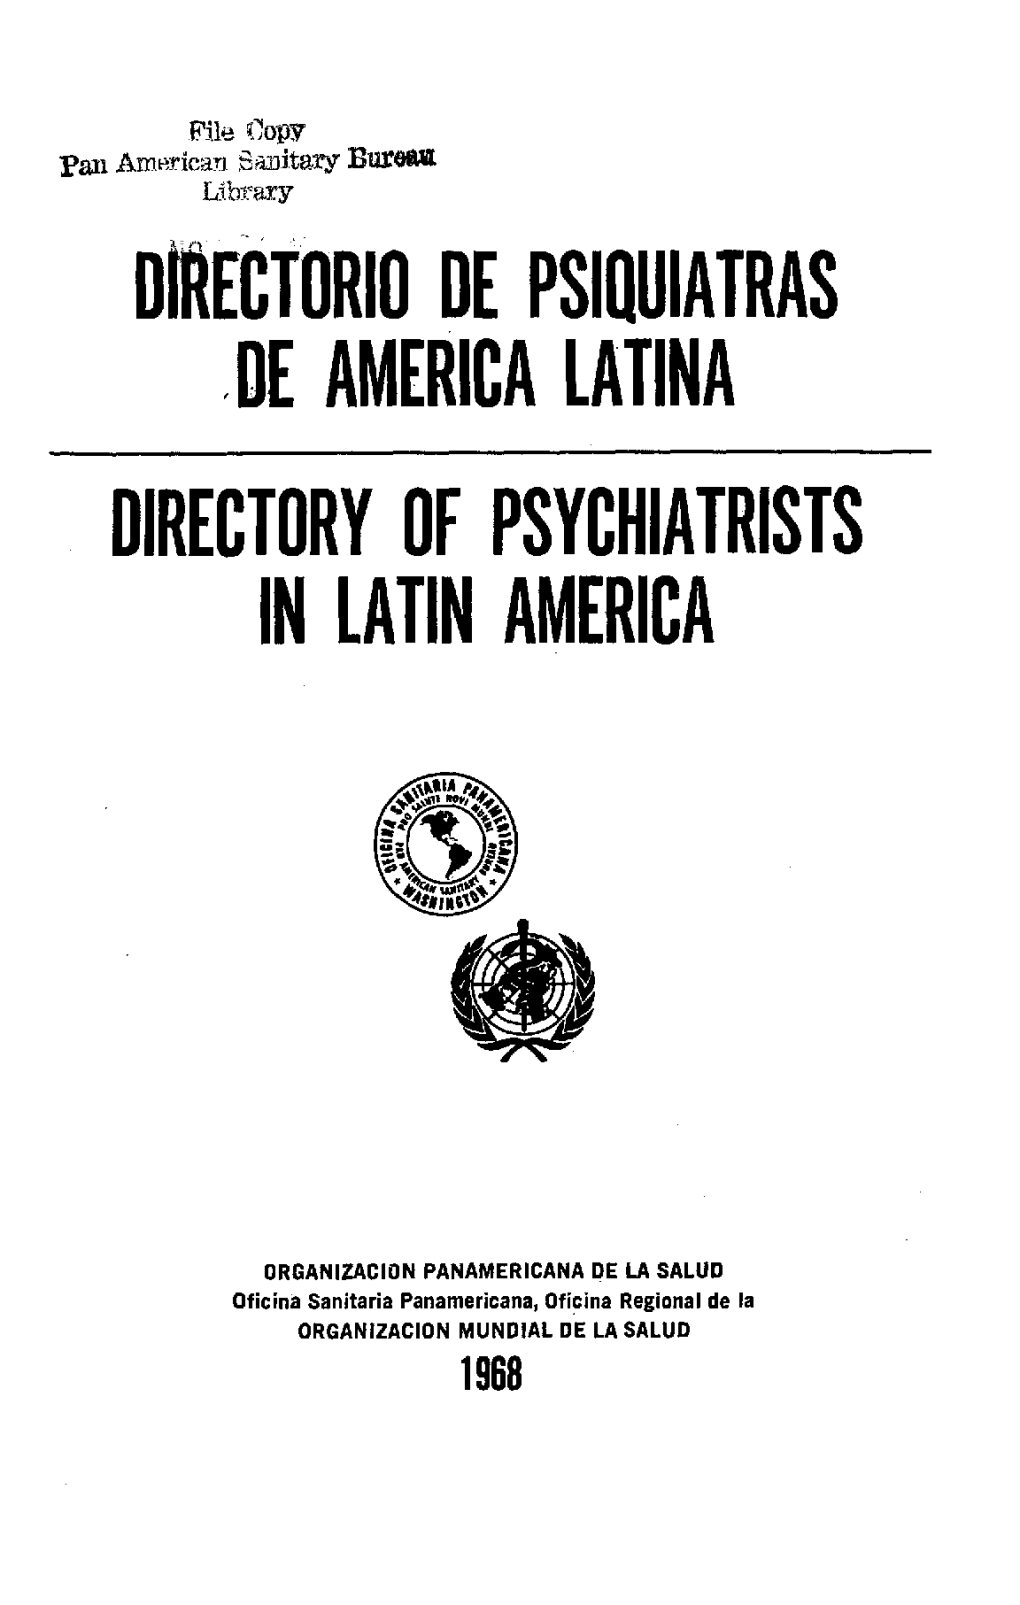 Directorio De Psiquiatras De America Latina Directory of Psychiatrists Inlatin America